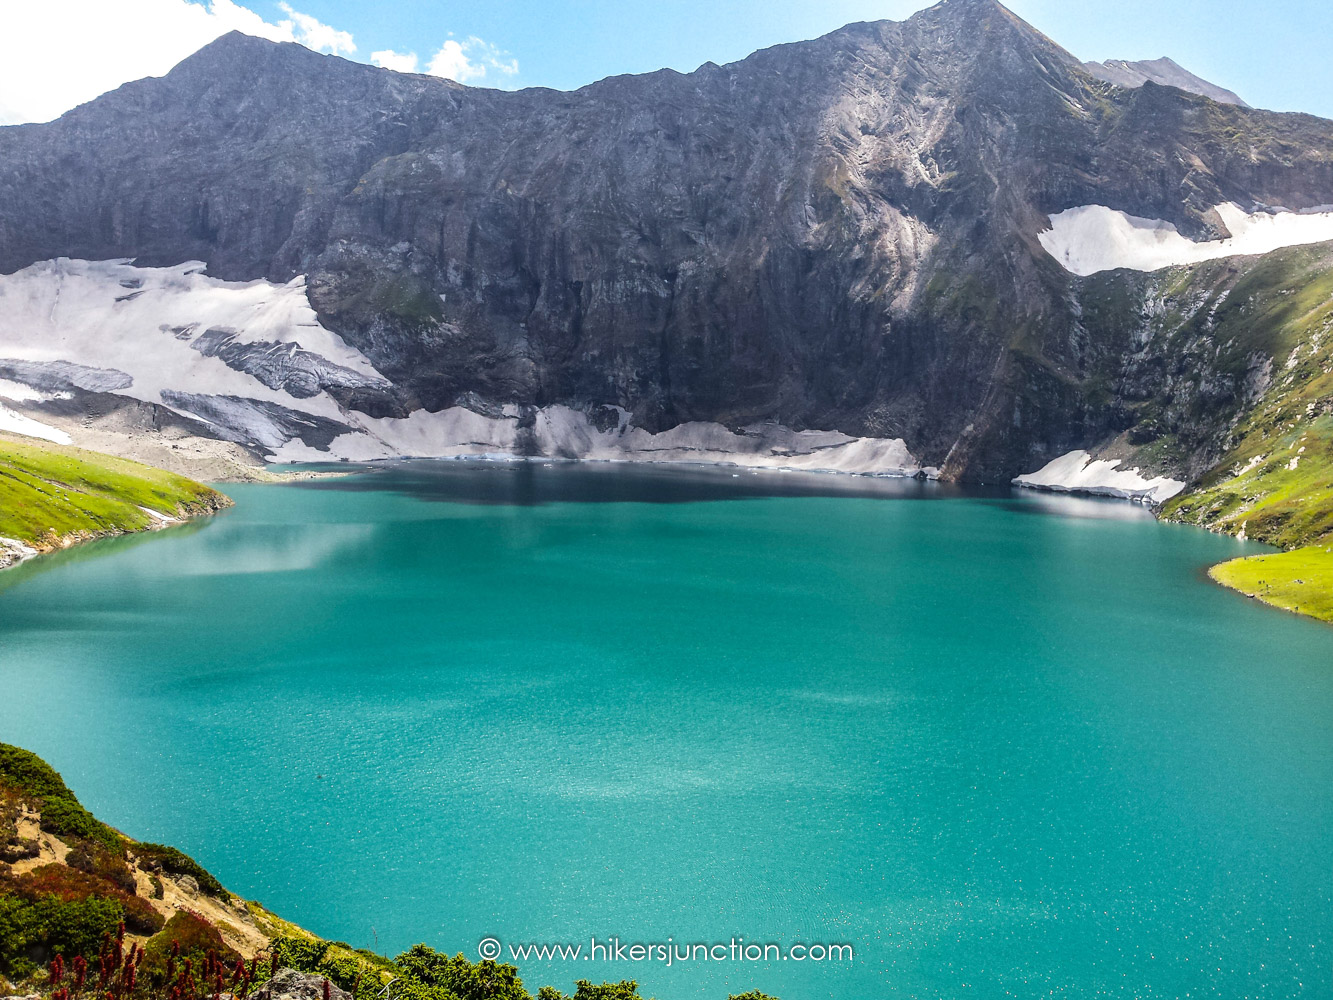 Turquoise Water of Ratti Gali Lake